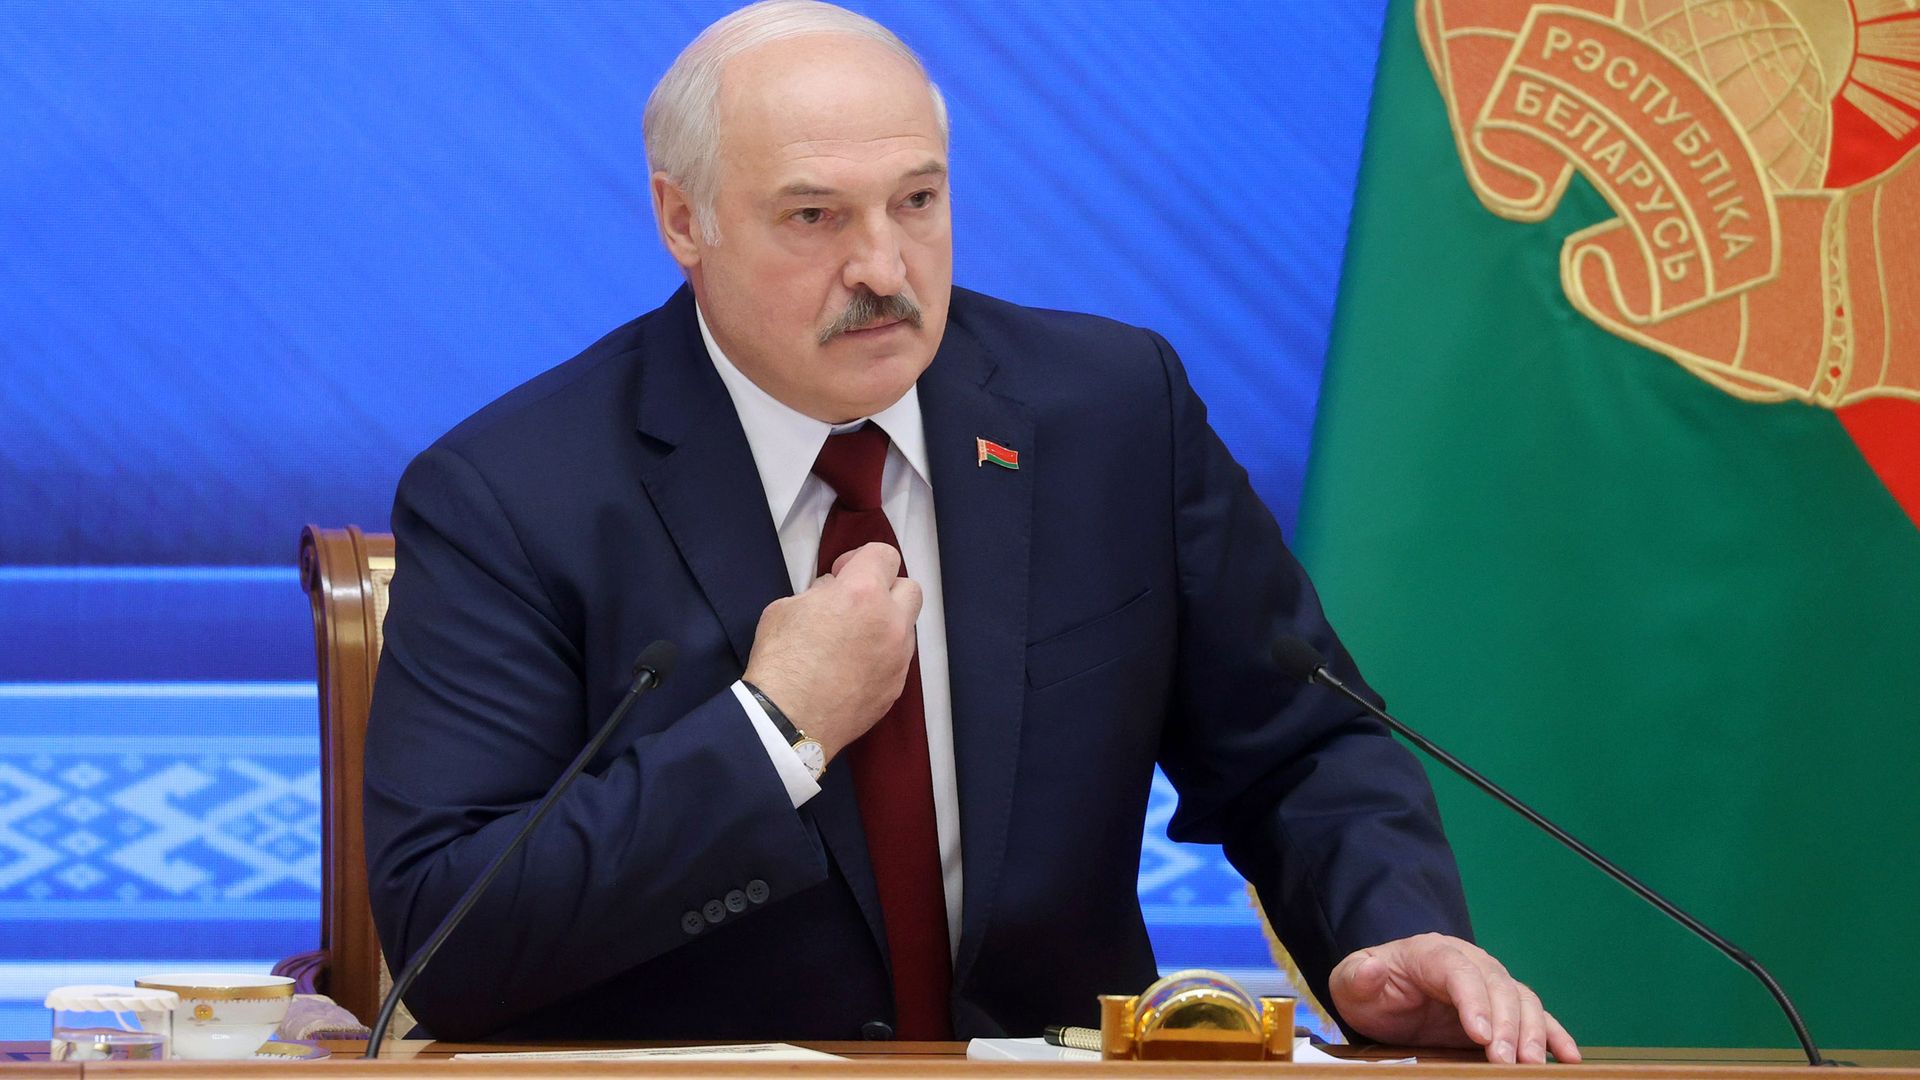 Belarusian President Alexander Lukashenko speaking in Minsk on Aug. 9.